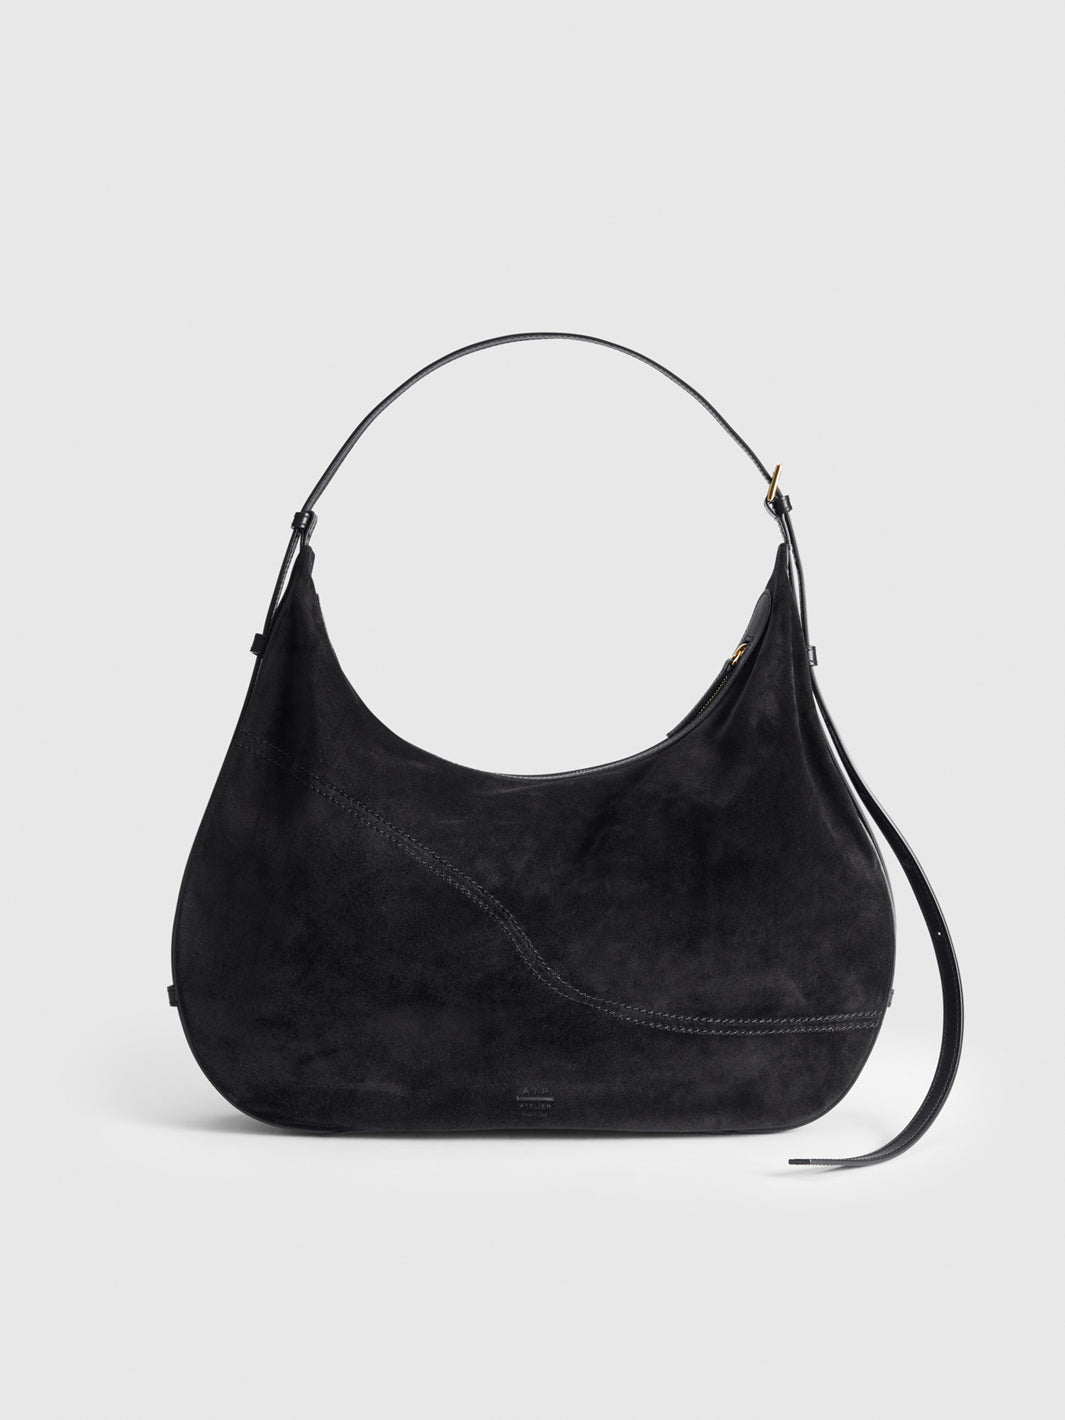 Potenza Black Suede/Leather Large hobo bag